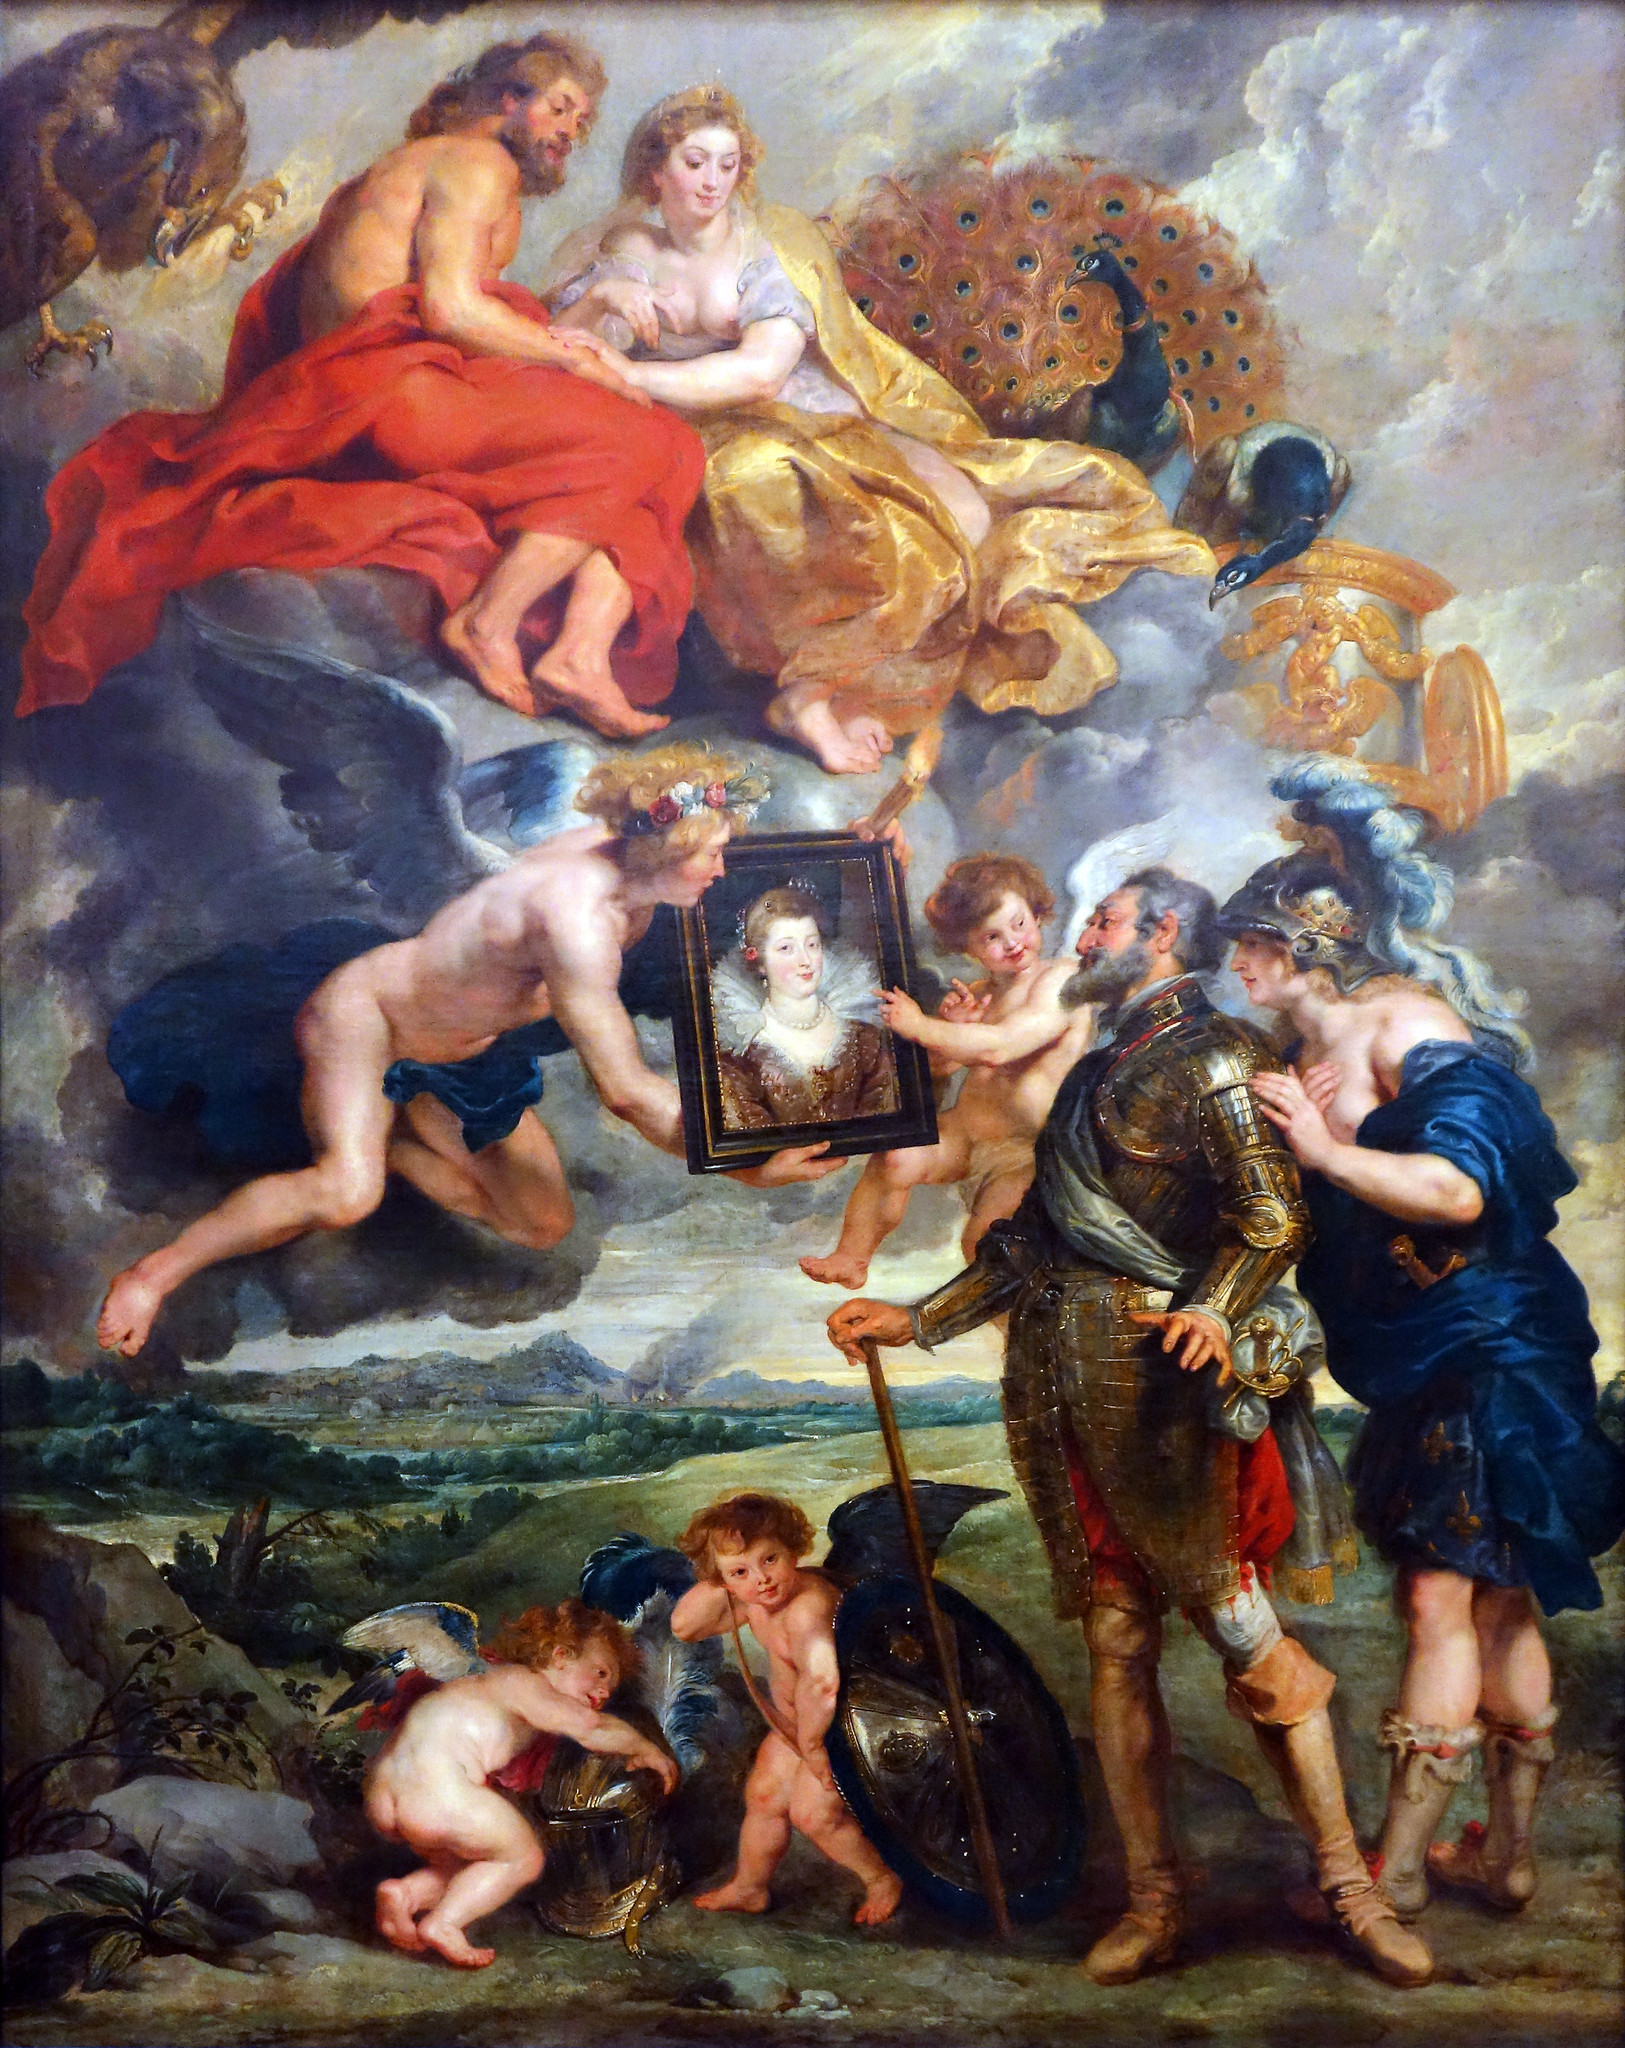 <p><strong>The Presentation of the Portrait of Marie de’Medici</strong></p><p>Peter Paul Rubens</p><p>Baroque</p><p>1622-1625</p><p>Oil on canvas</p>